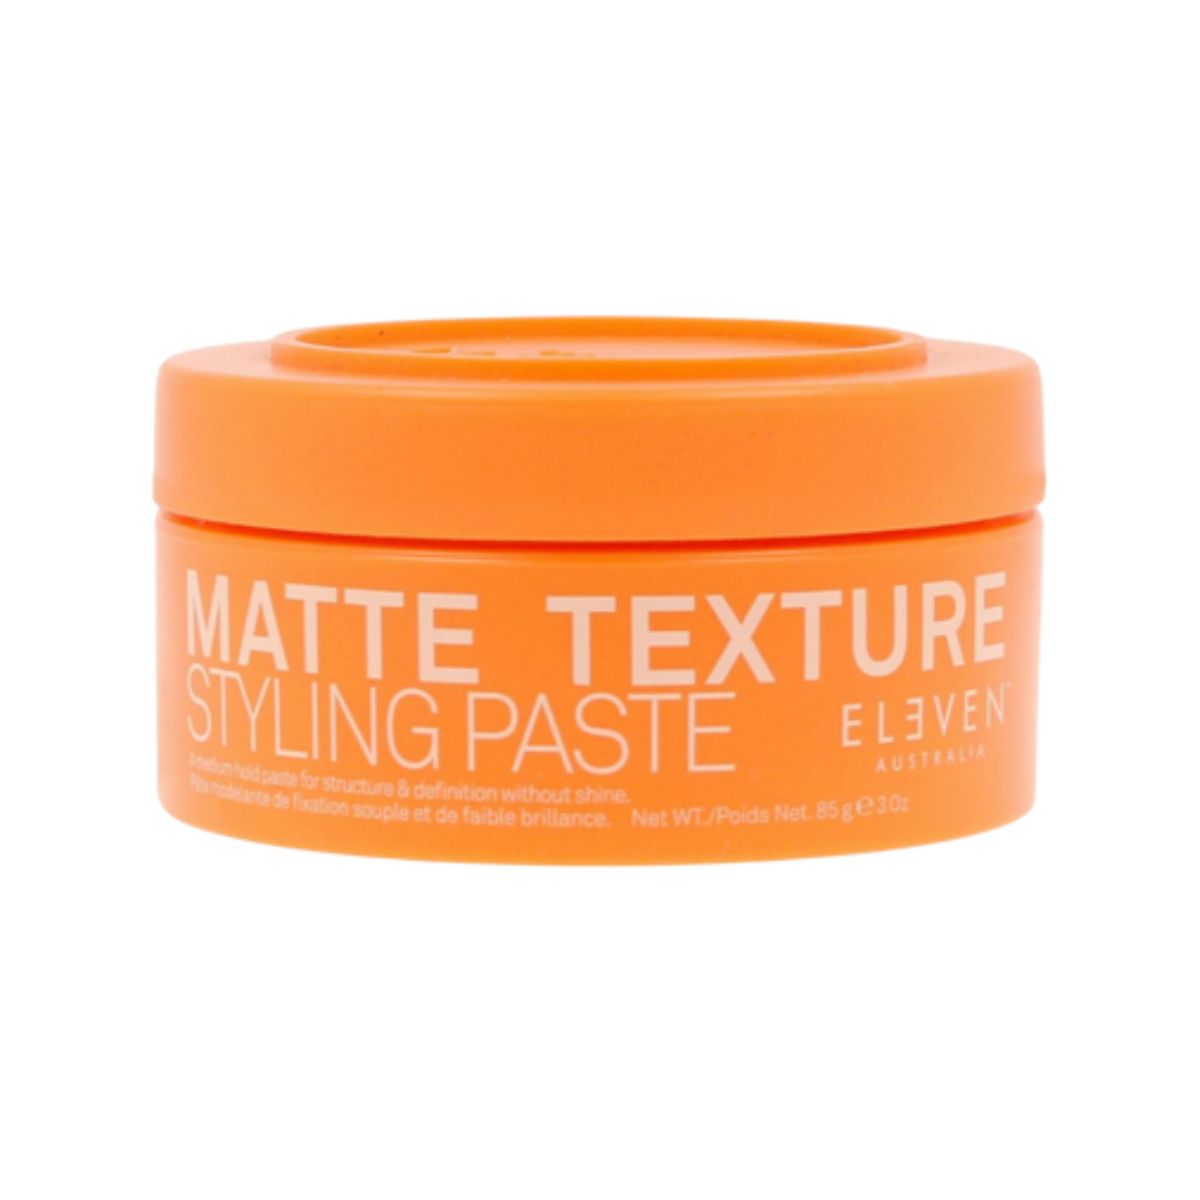 Eleven Matte Texture Styling Paste